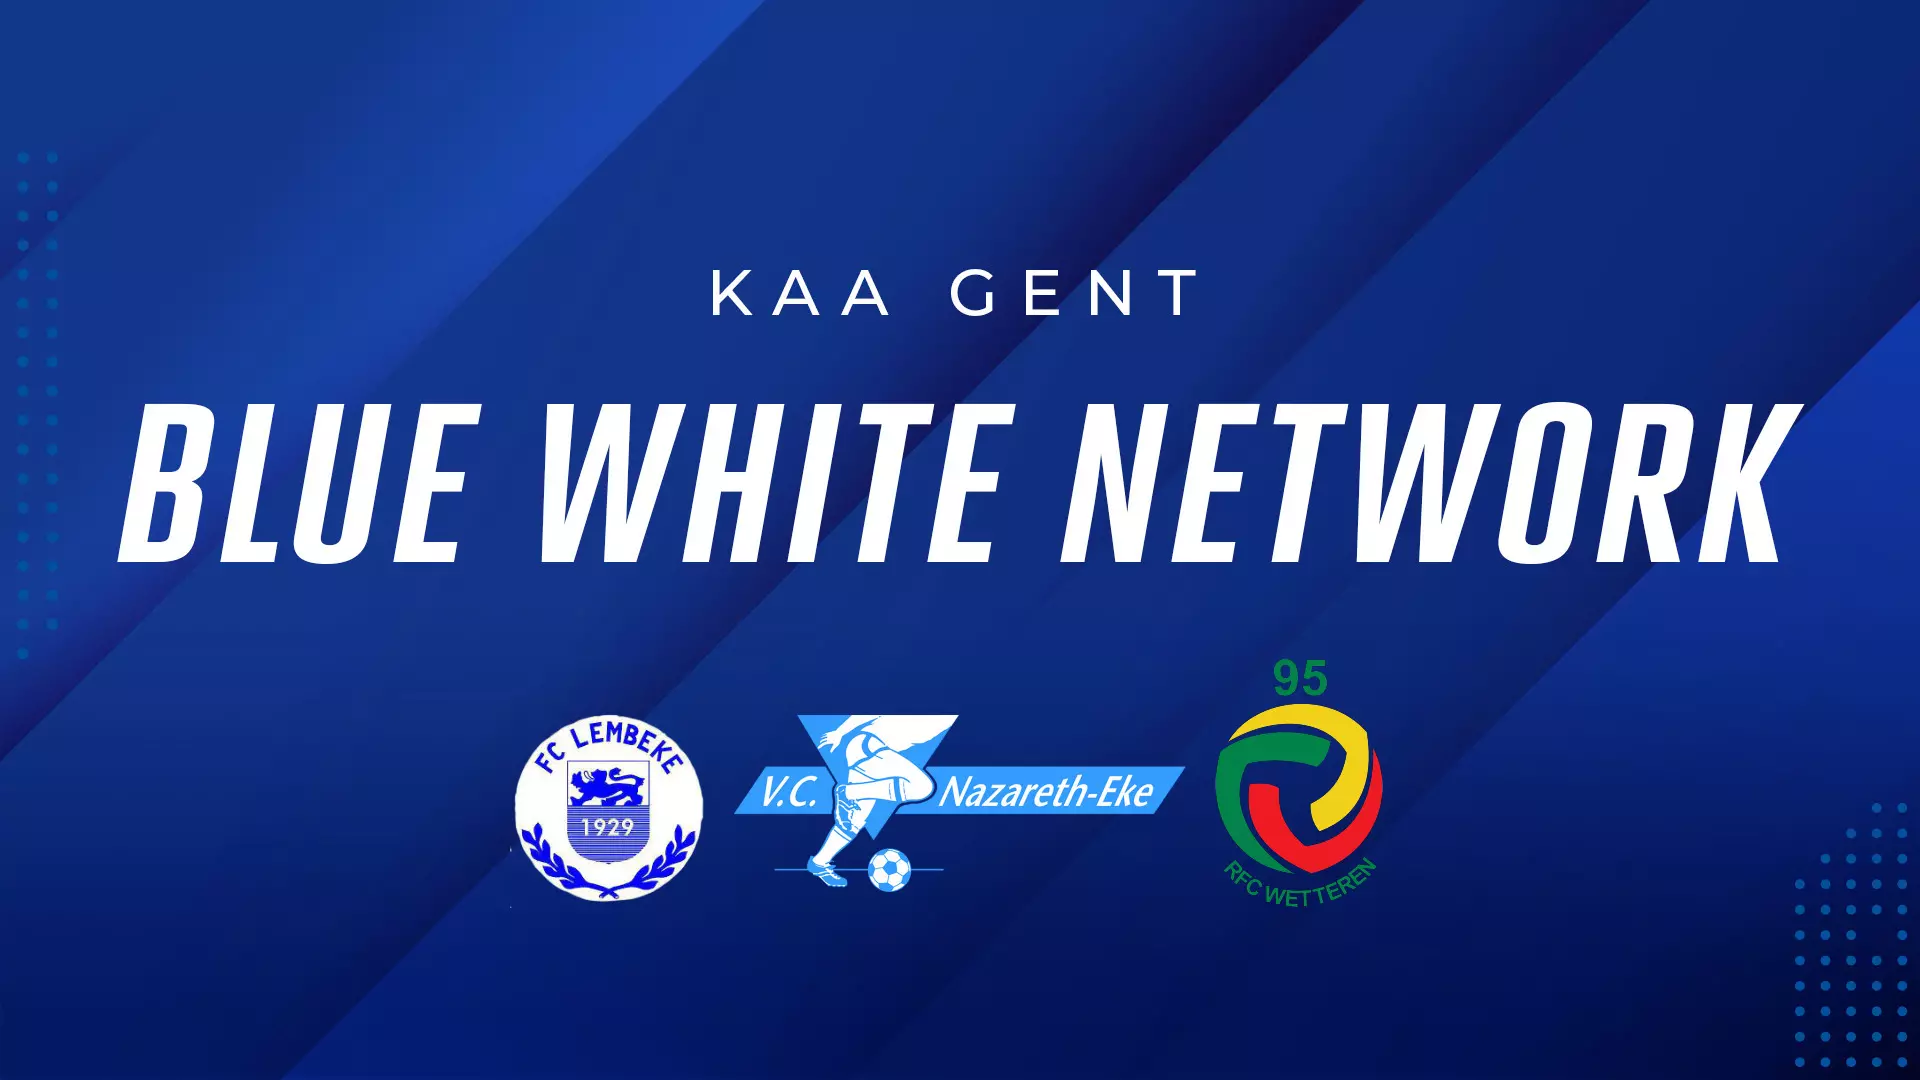 RFC Wetteren en VC Nazareth-Eke versterken Blue White Network